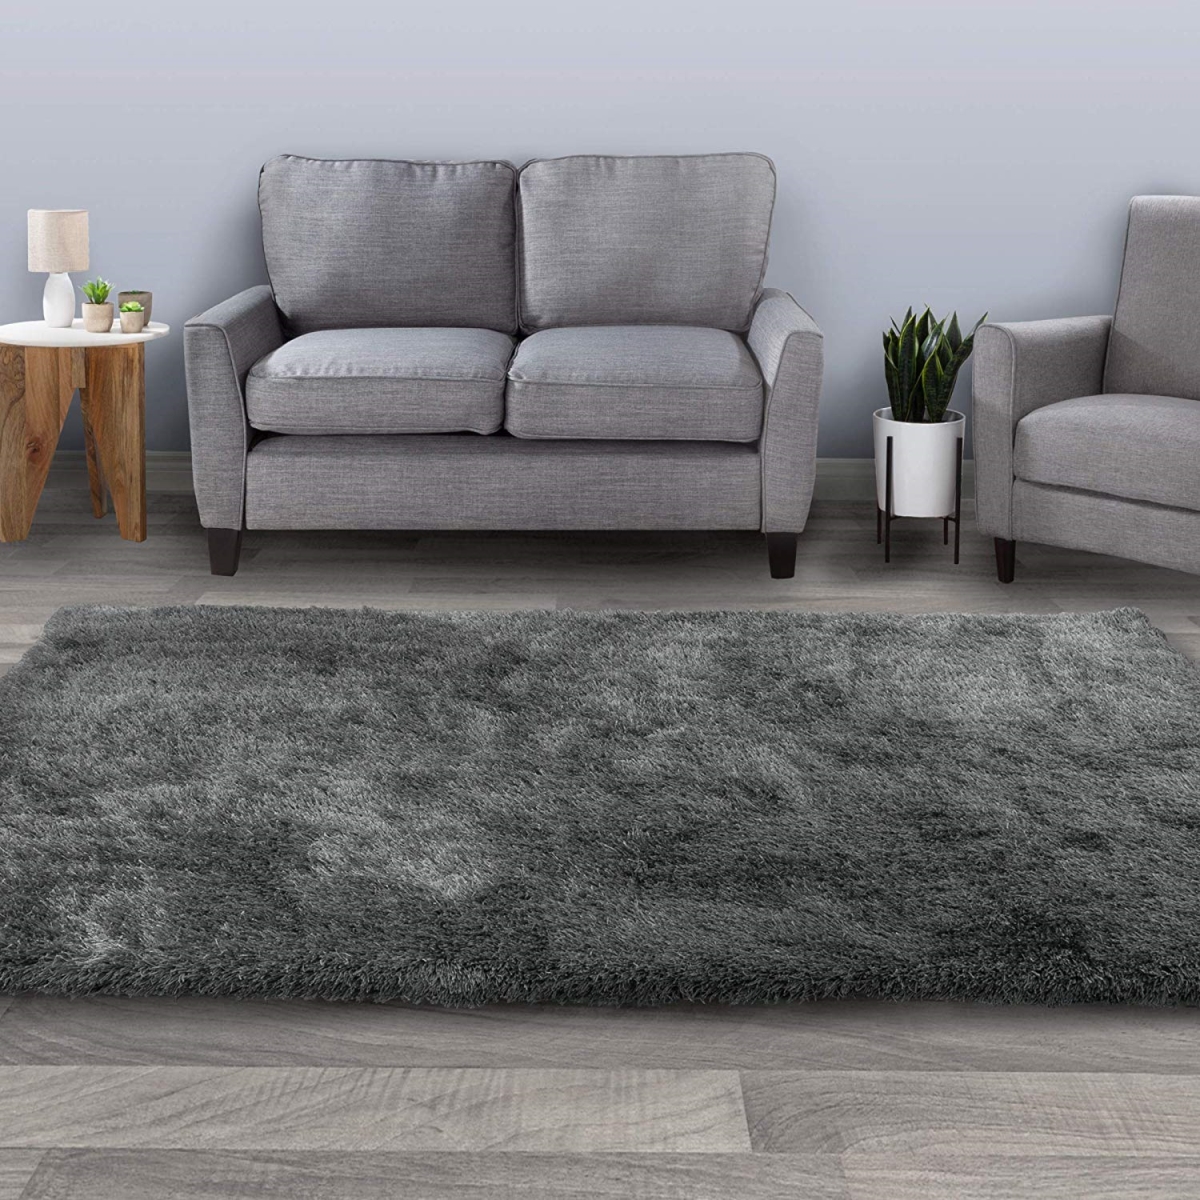 62a-64241 8 X 10 Ft. Shag Area Plush Throw Carpet, Grey